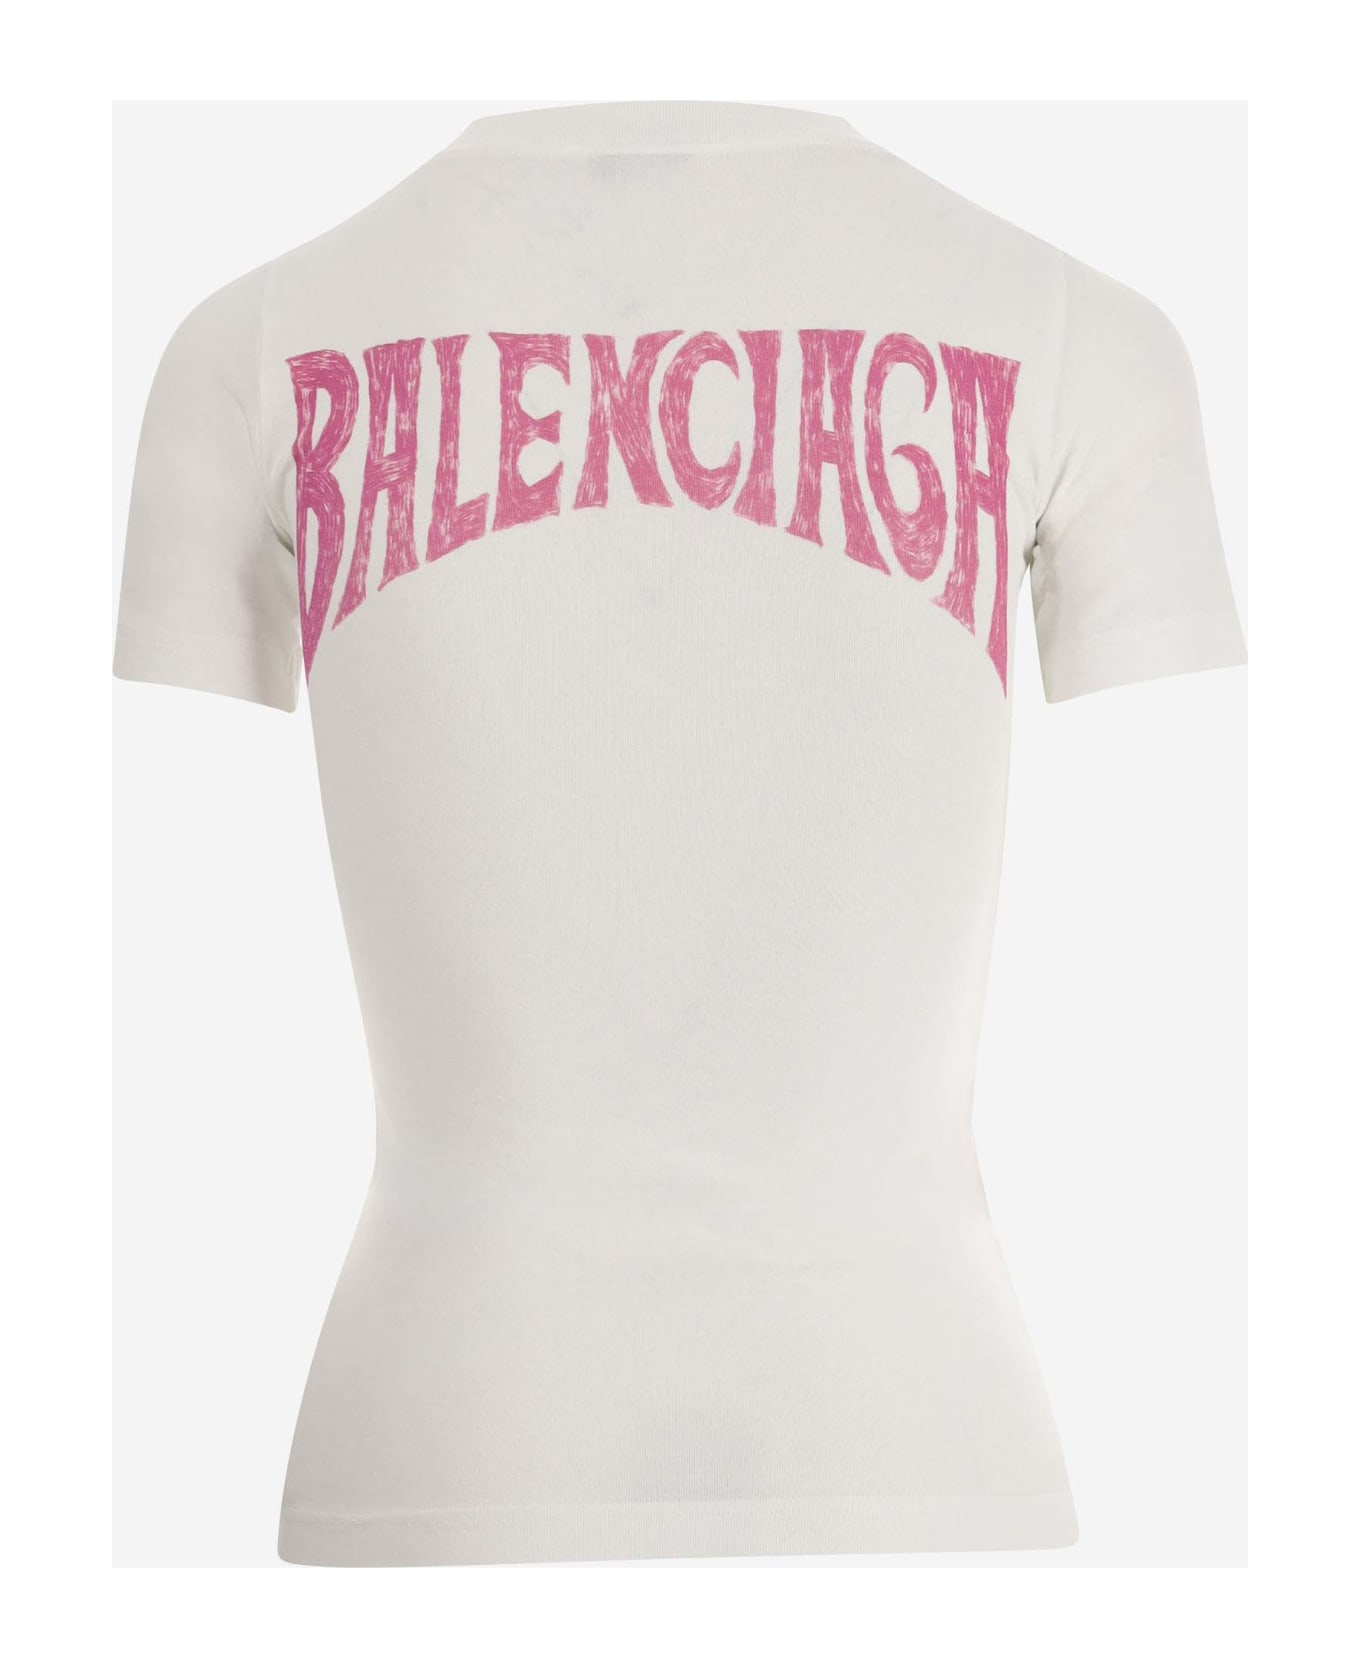 Balenciaga Stretch Cotton T-shirt With Graphic Print - White Pink